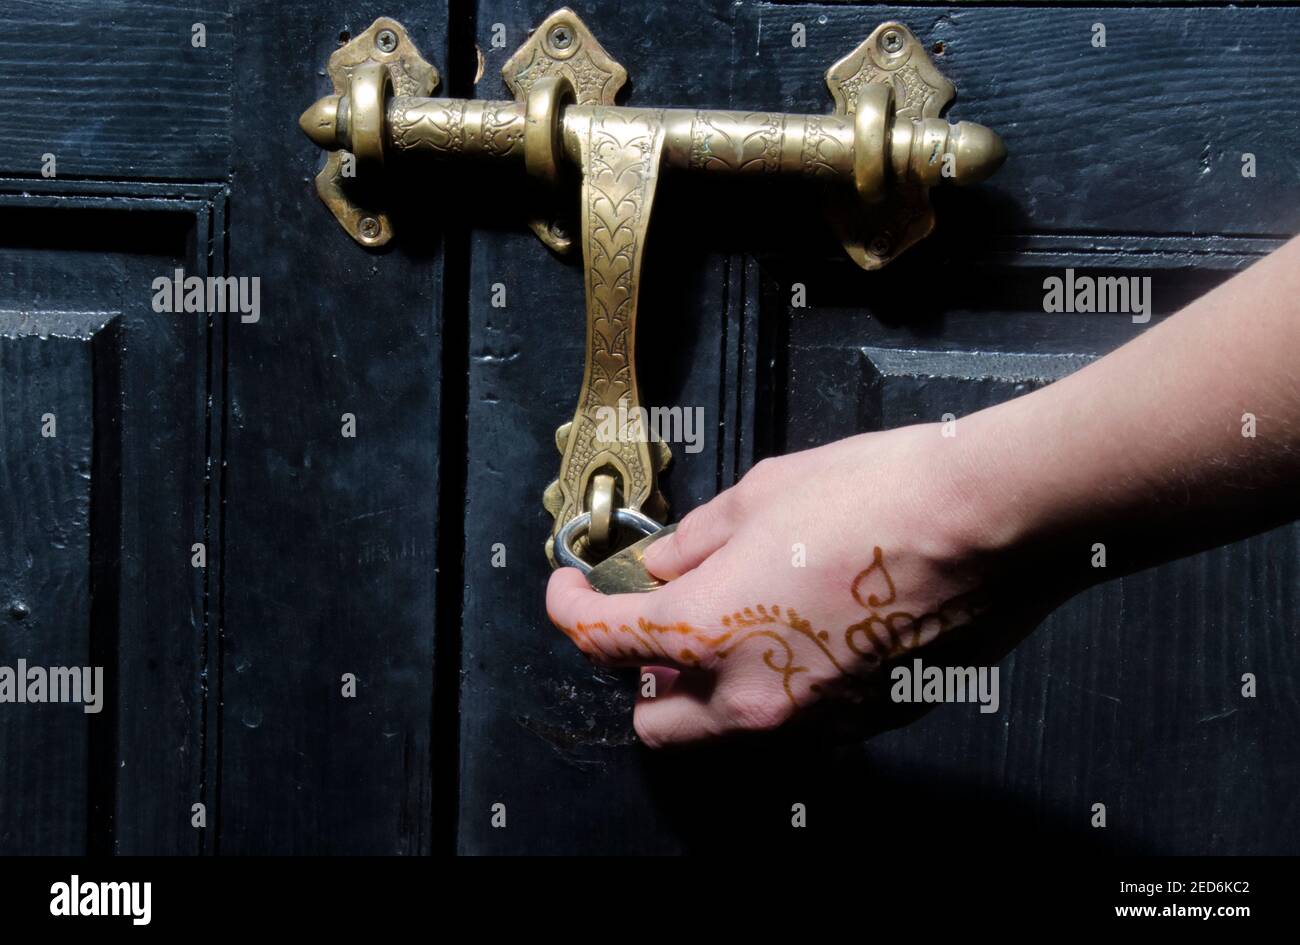 Girl hand with henna holding ornamental brass lock Stock Photo